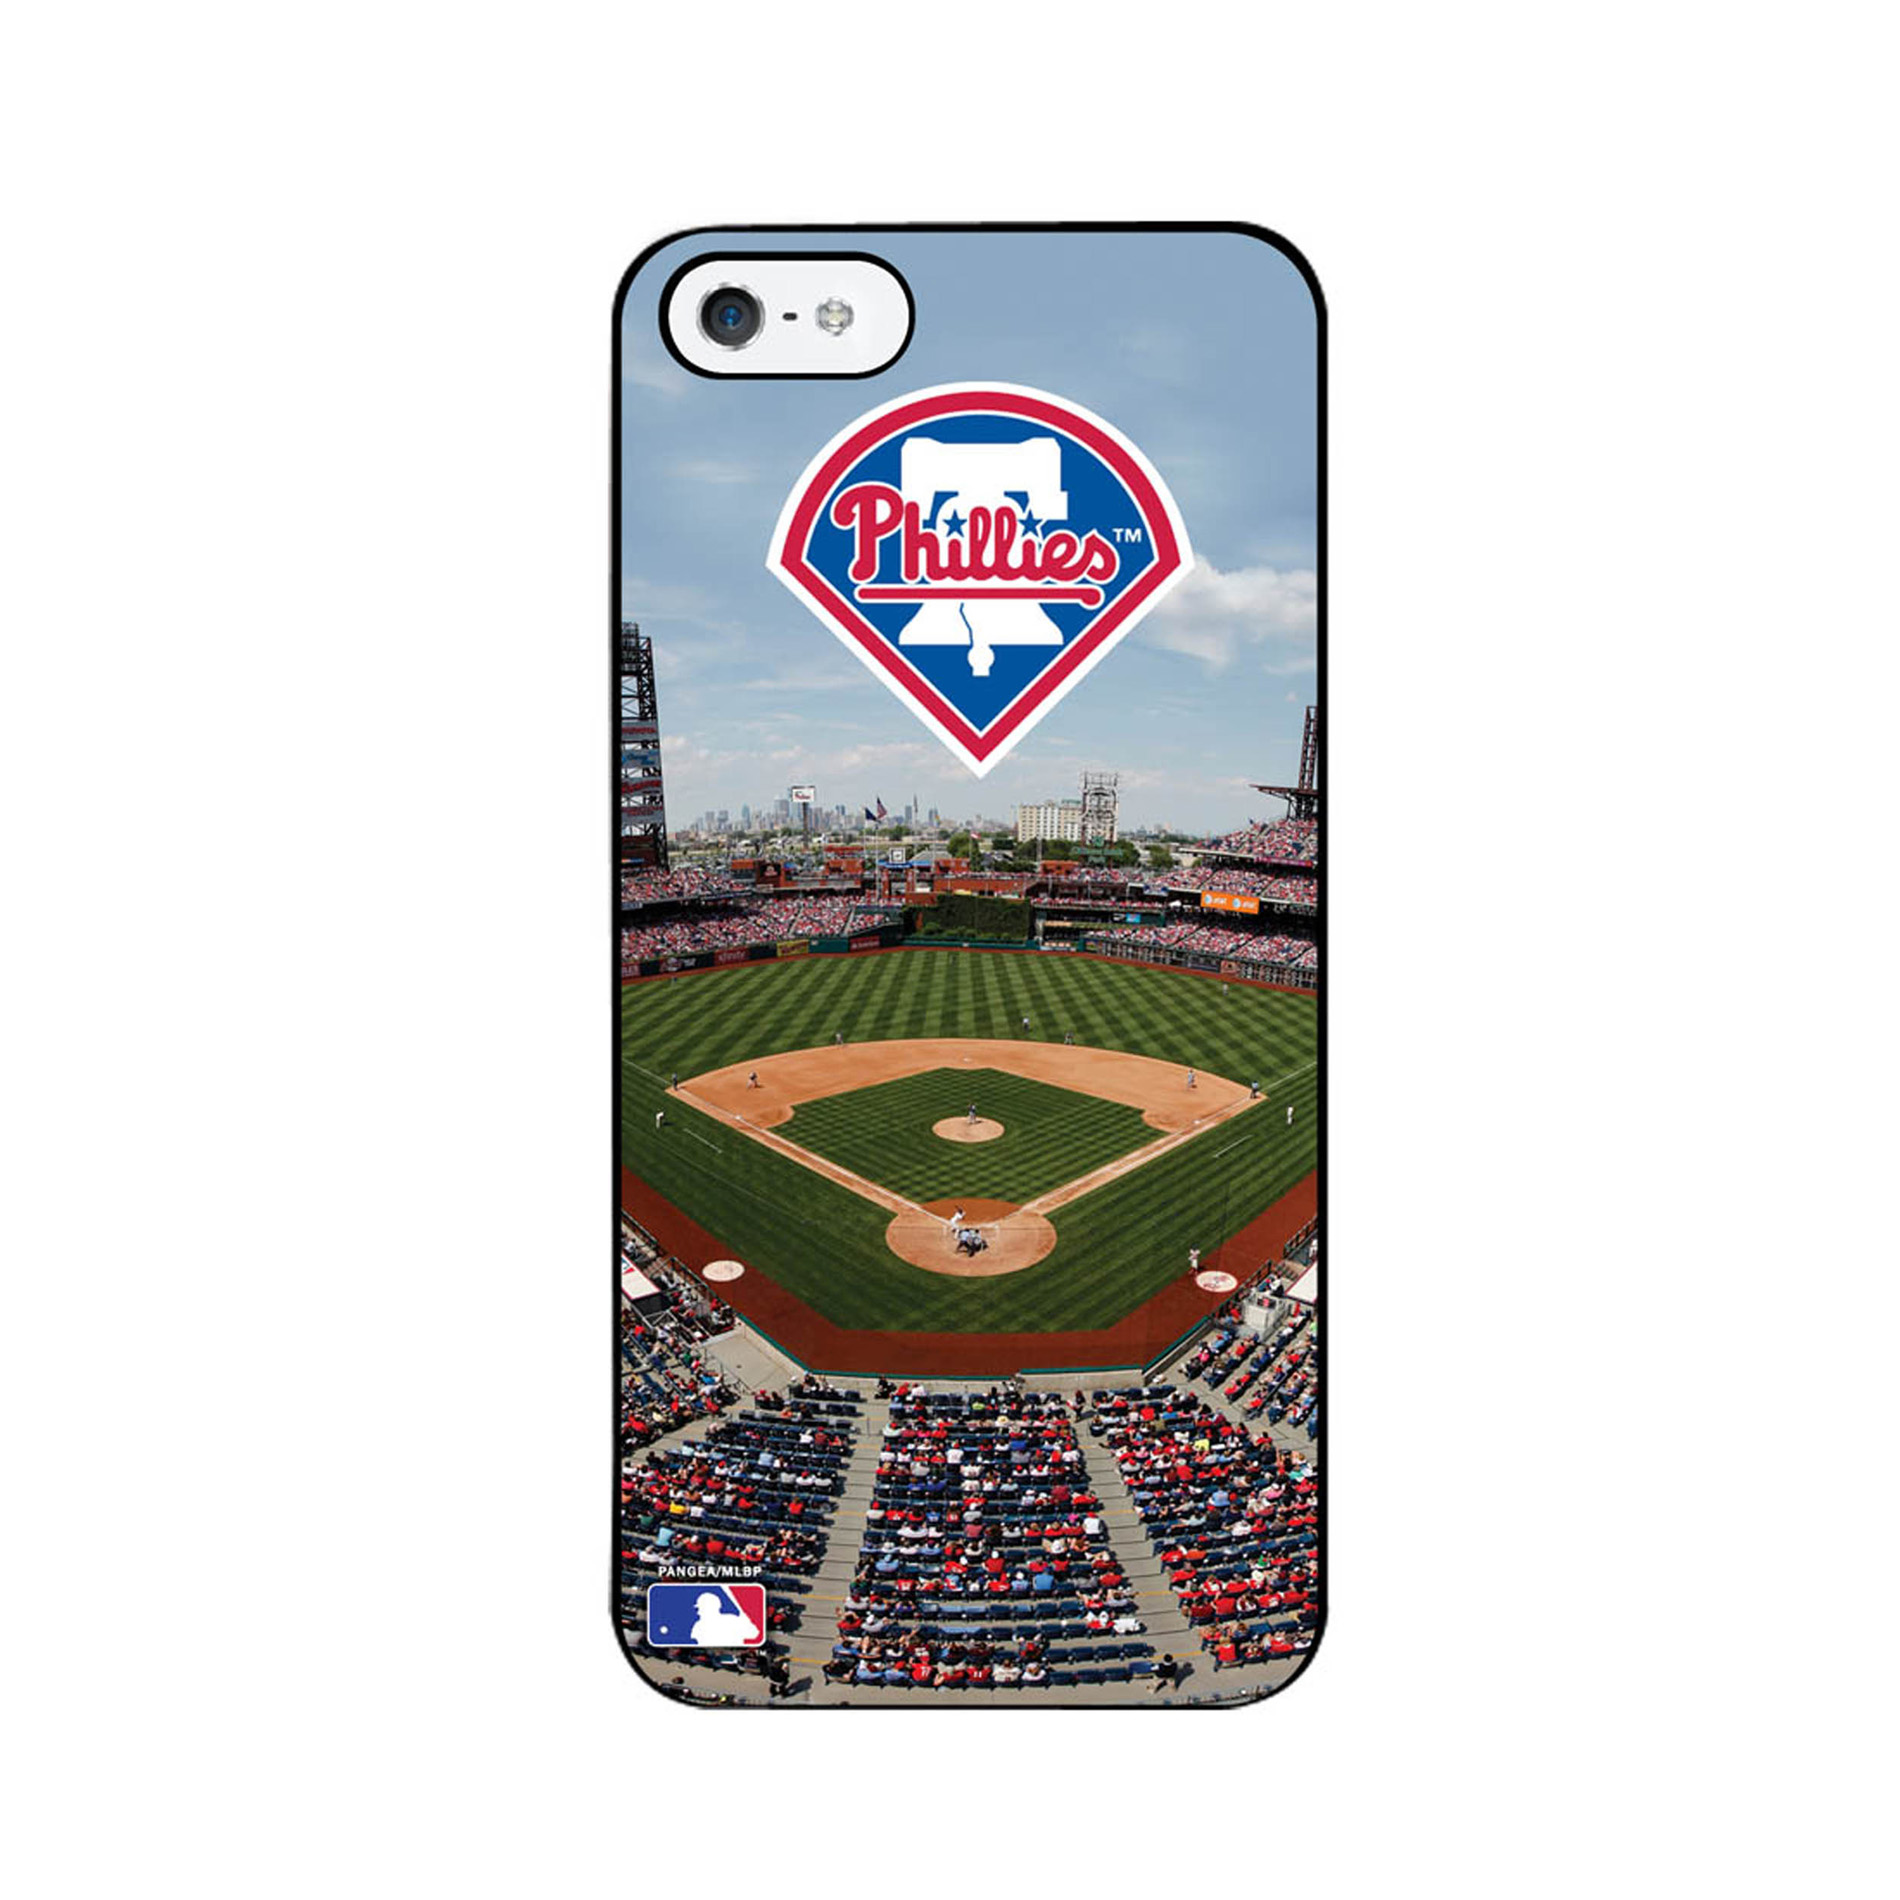 Pangea MLB - Stadium Collection IPhone 5 Case - Philadelphia Phillies